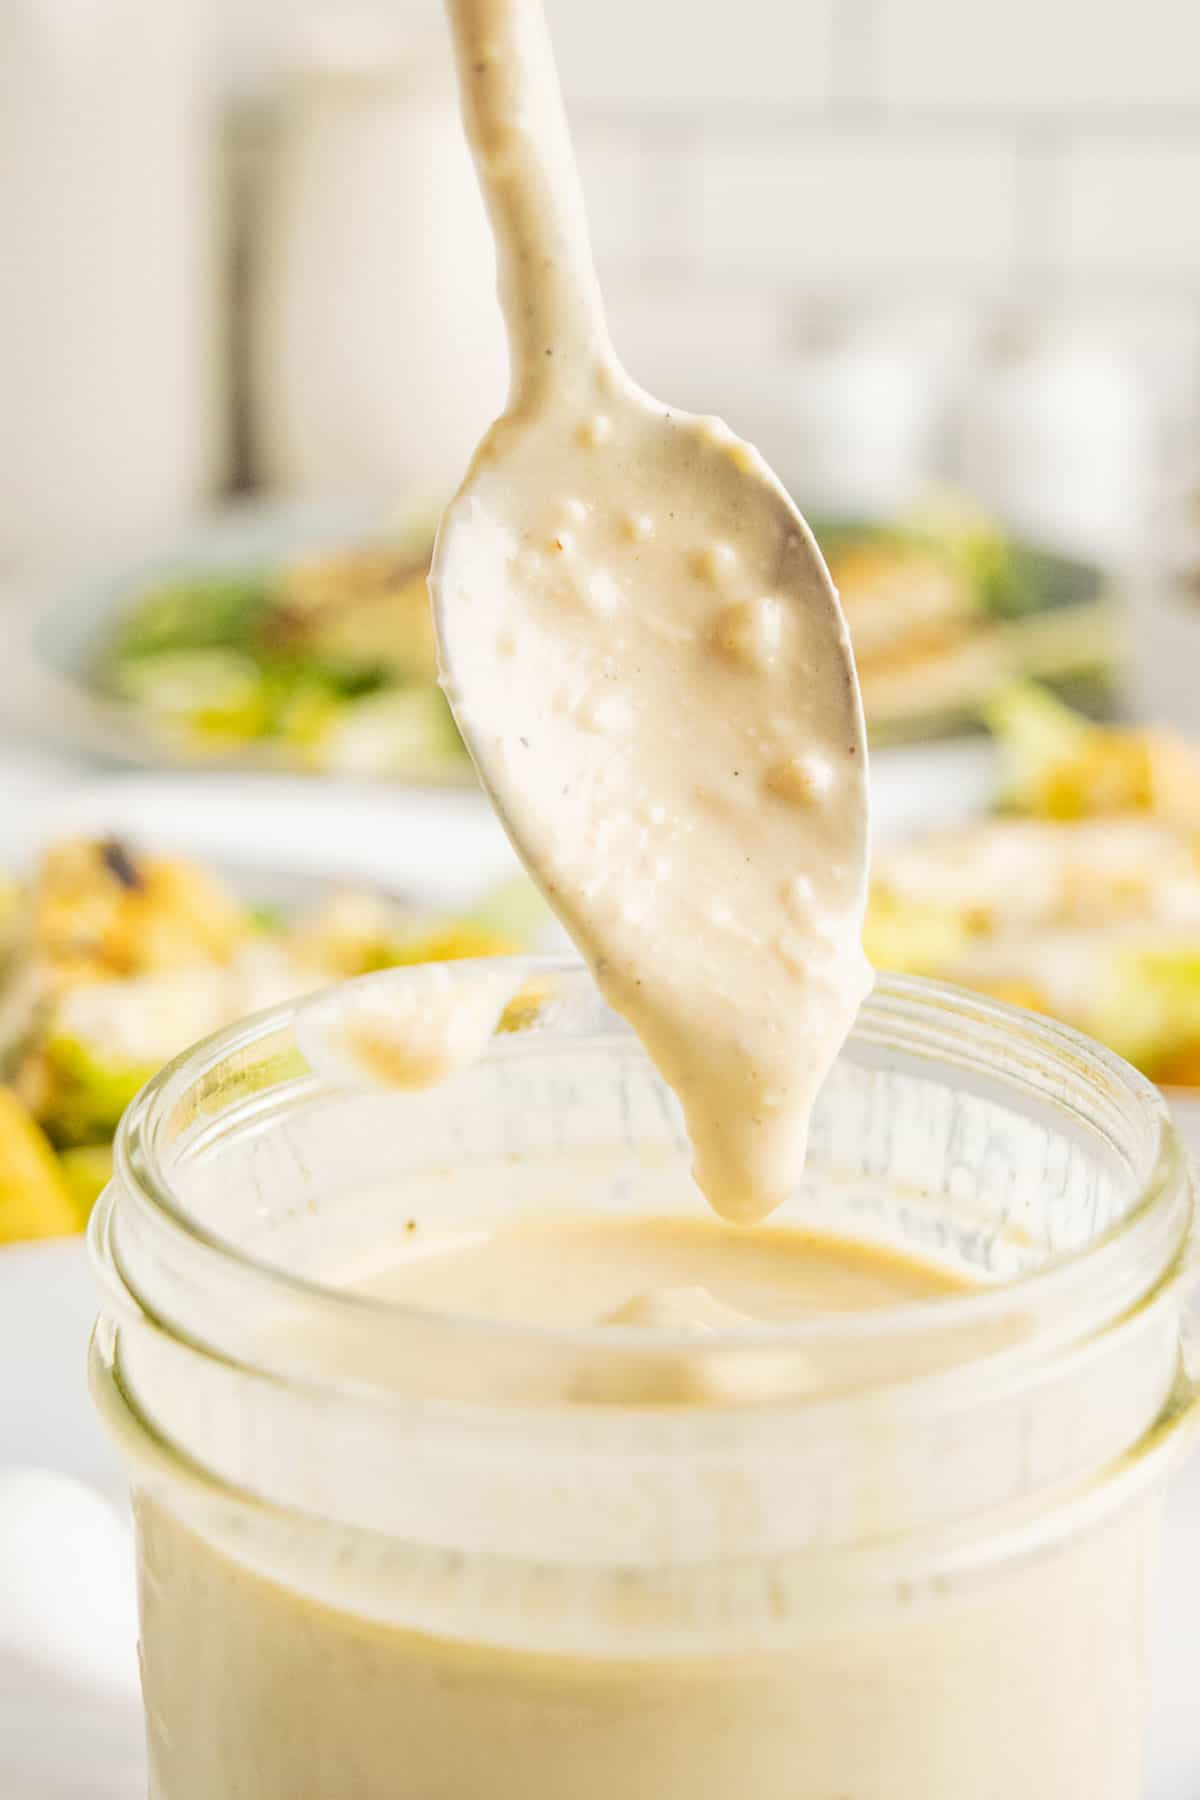 Creamy salad dressing dripping off a spoon